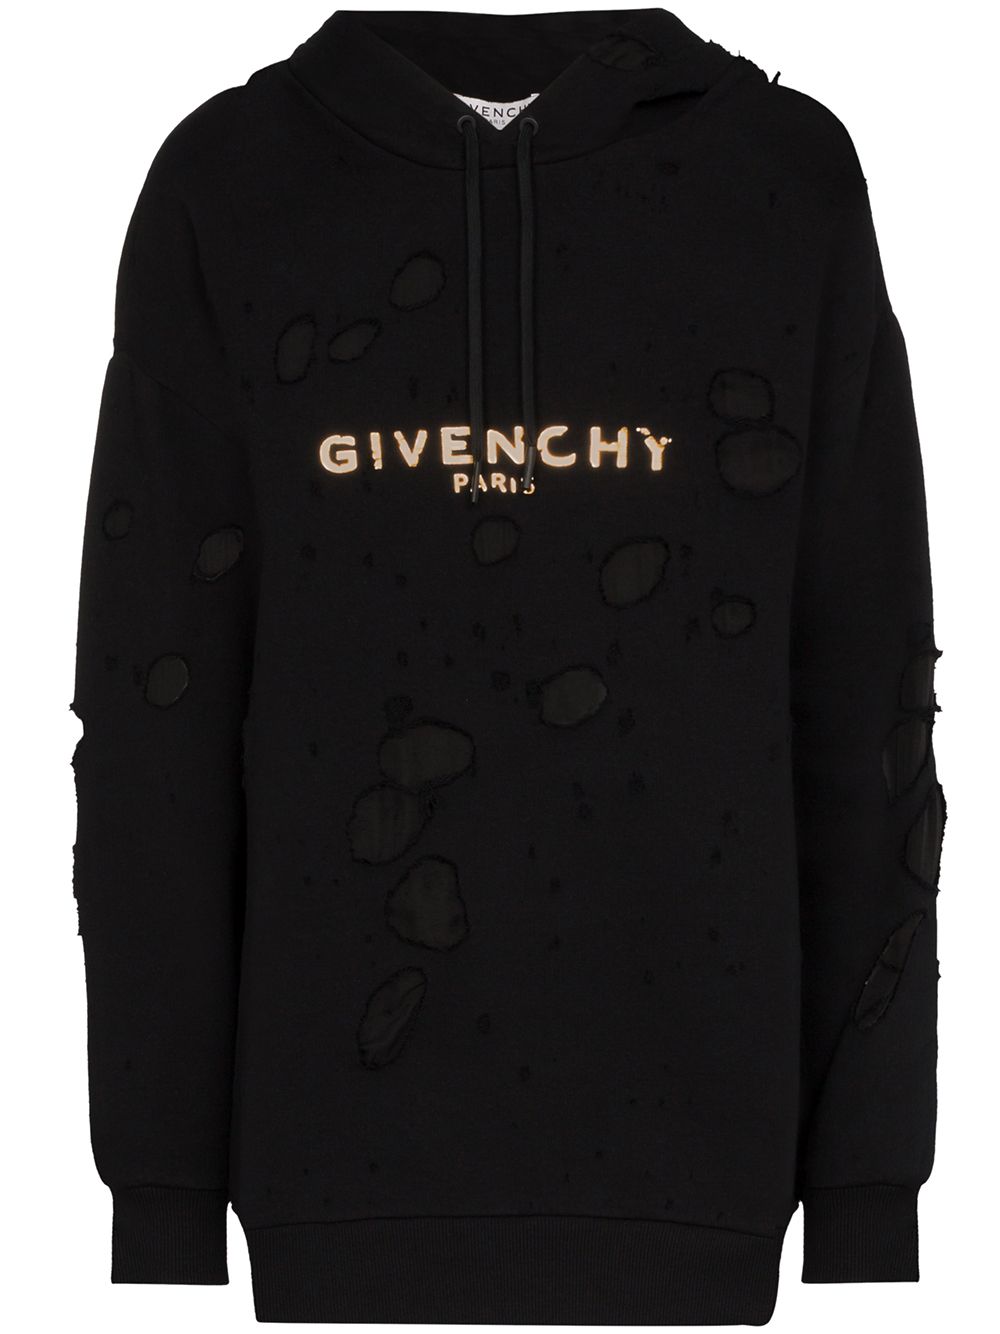 Shop black Givenchy distressed logo 